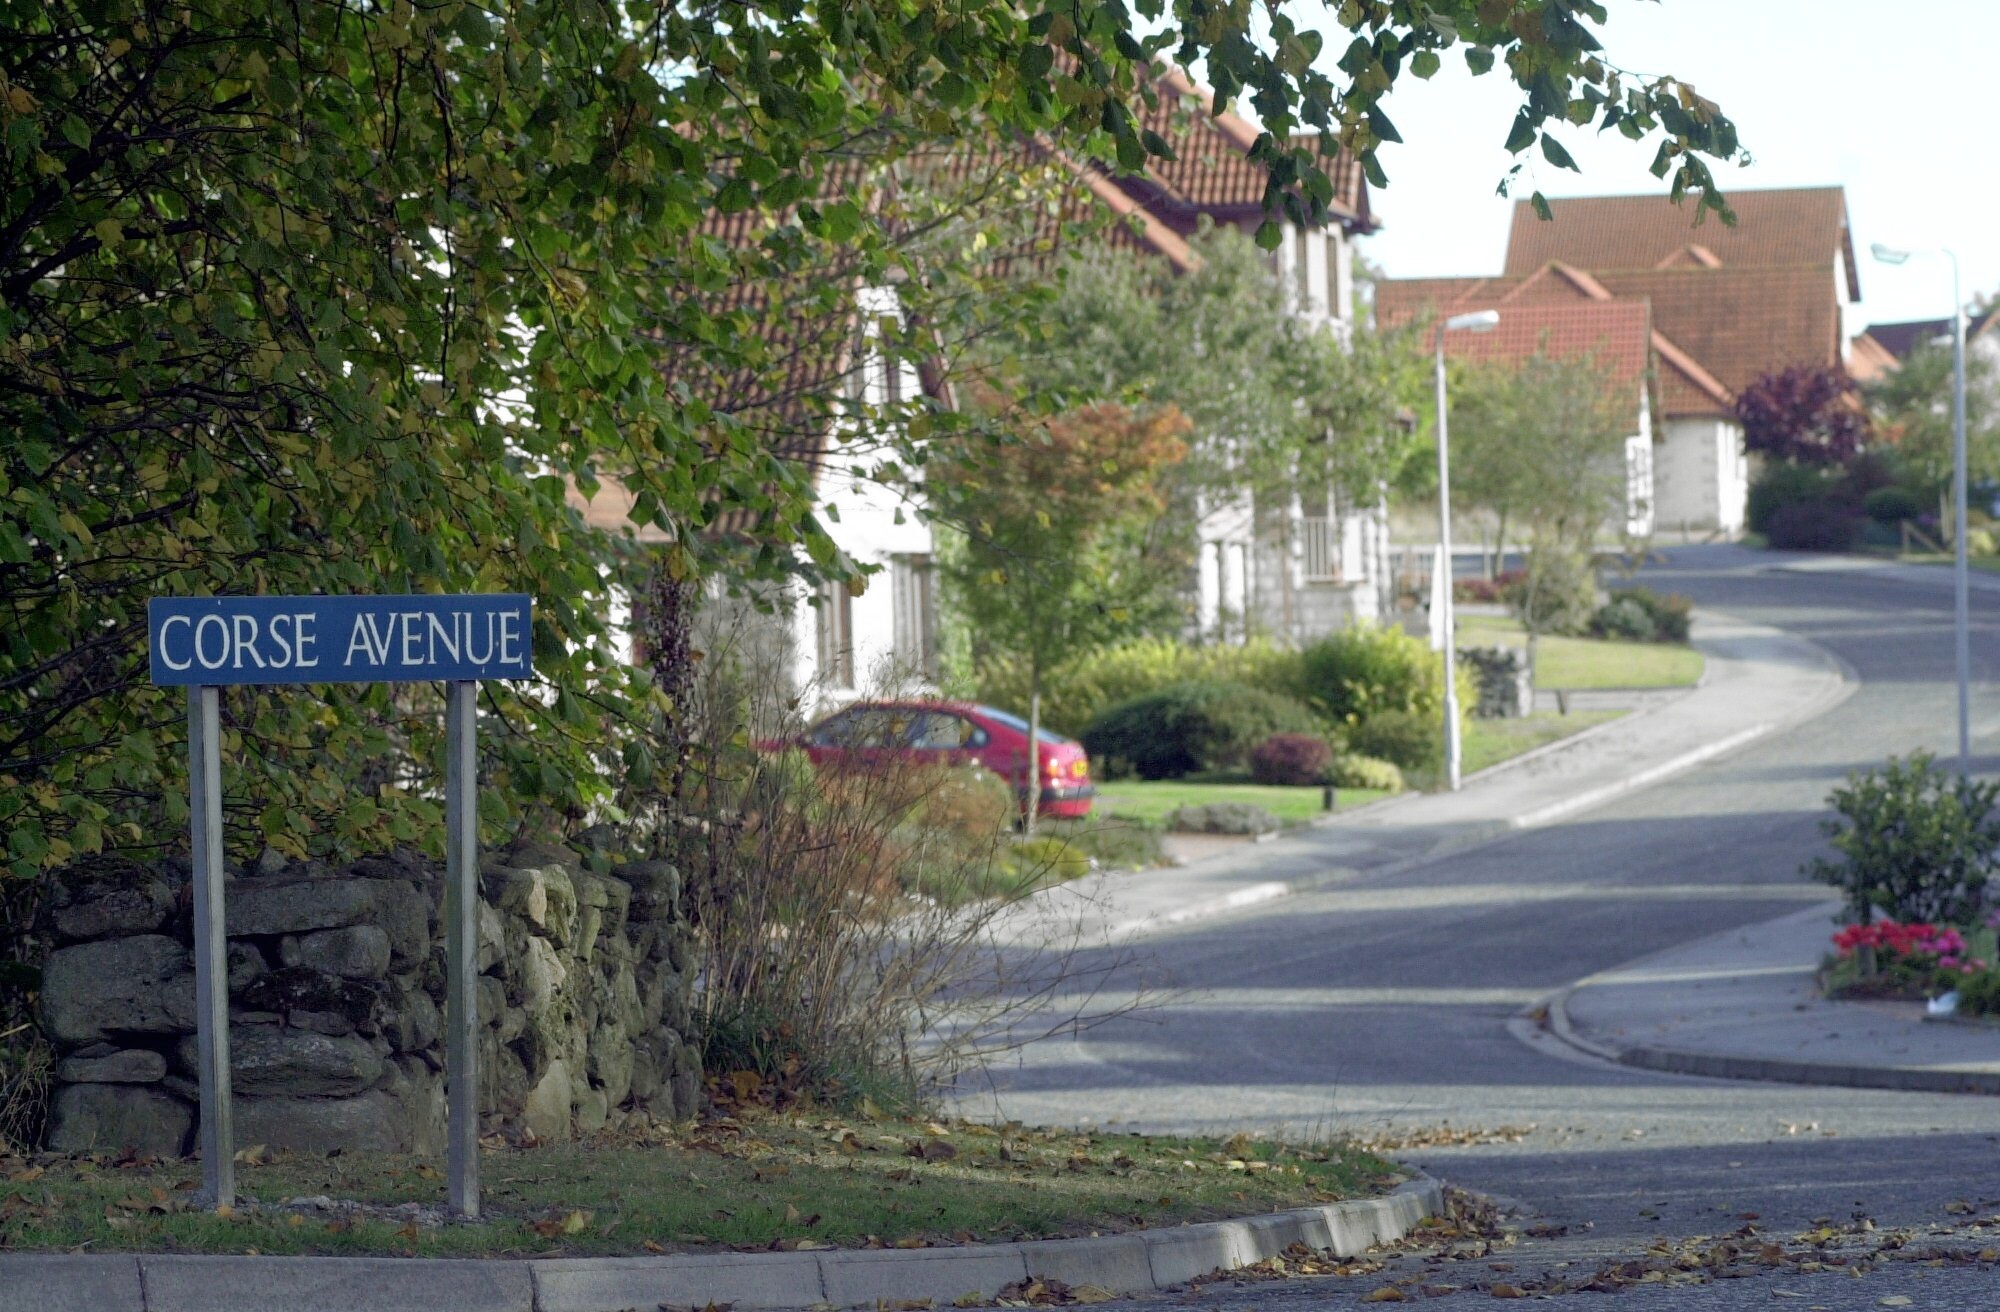 Corse Avenue in Kingswells.